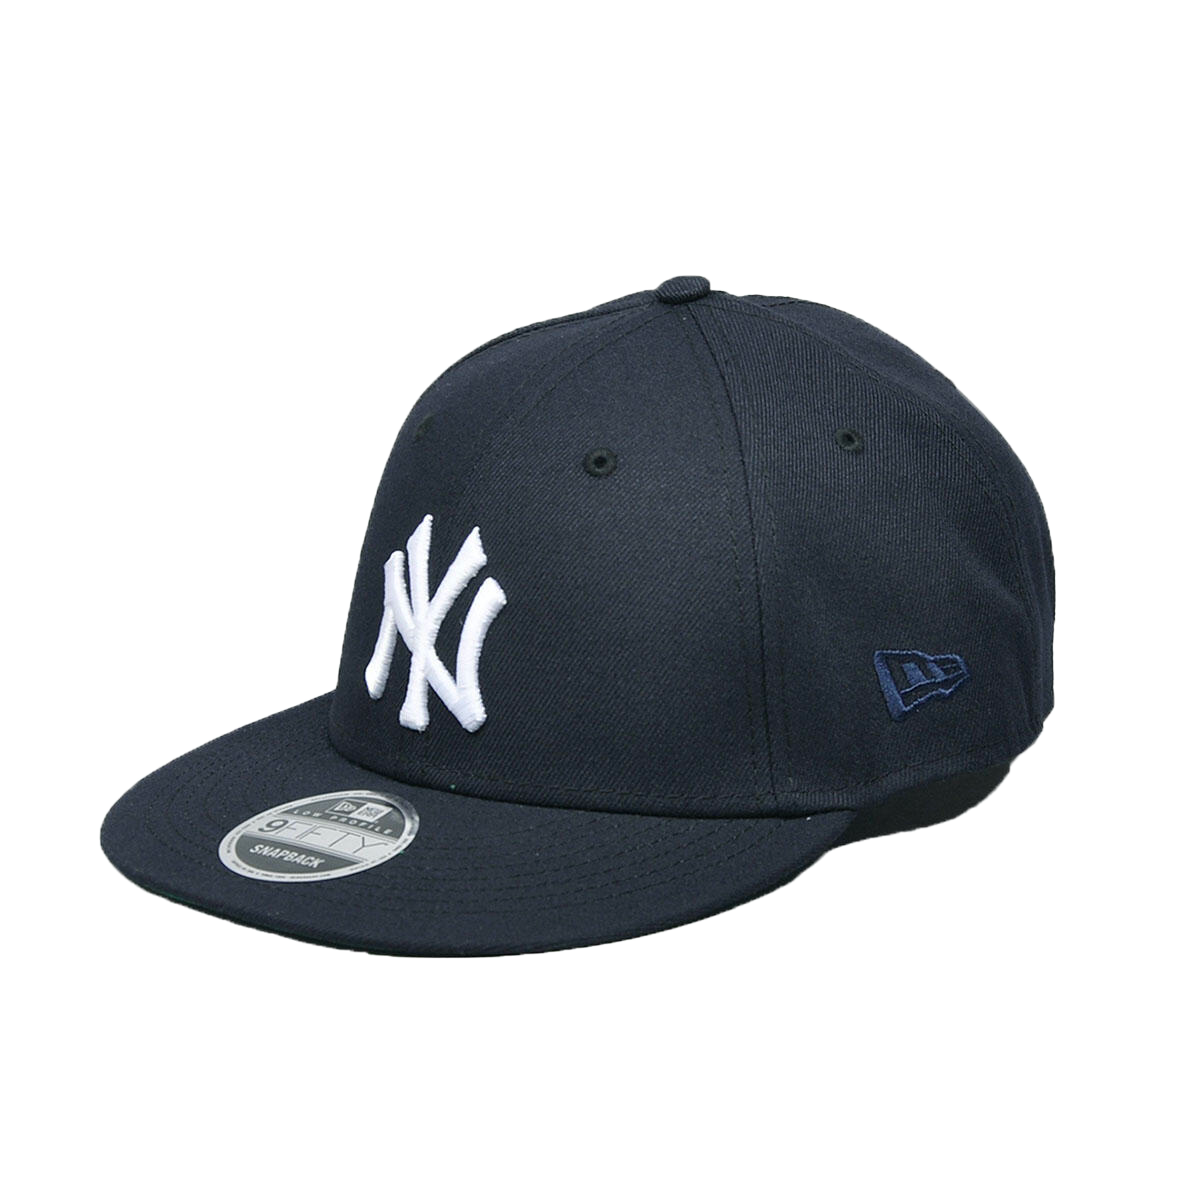 Alltimers New Era Yankees Cap Snapback Hat- Navy Blue